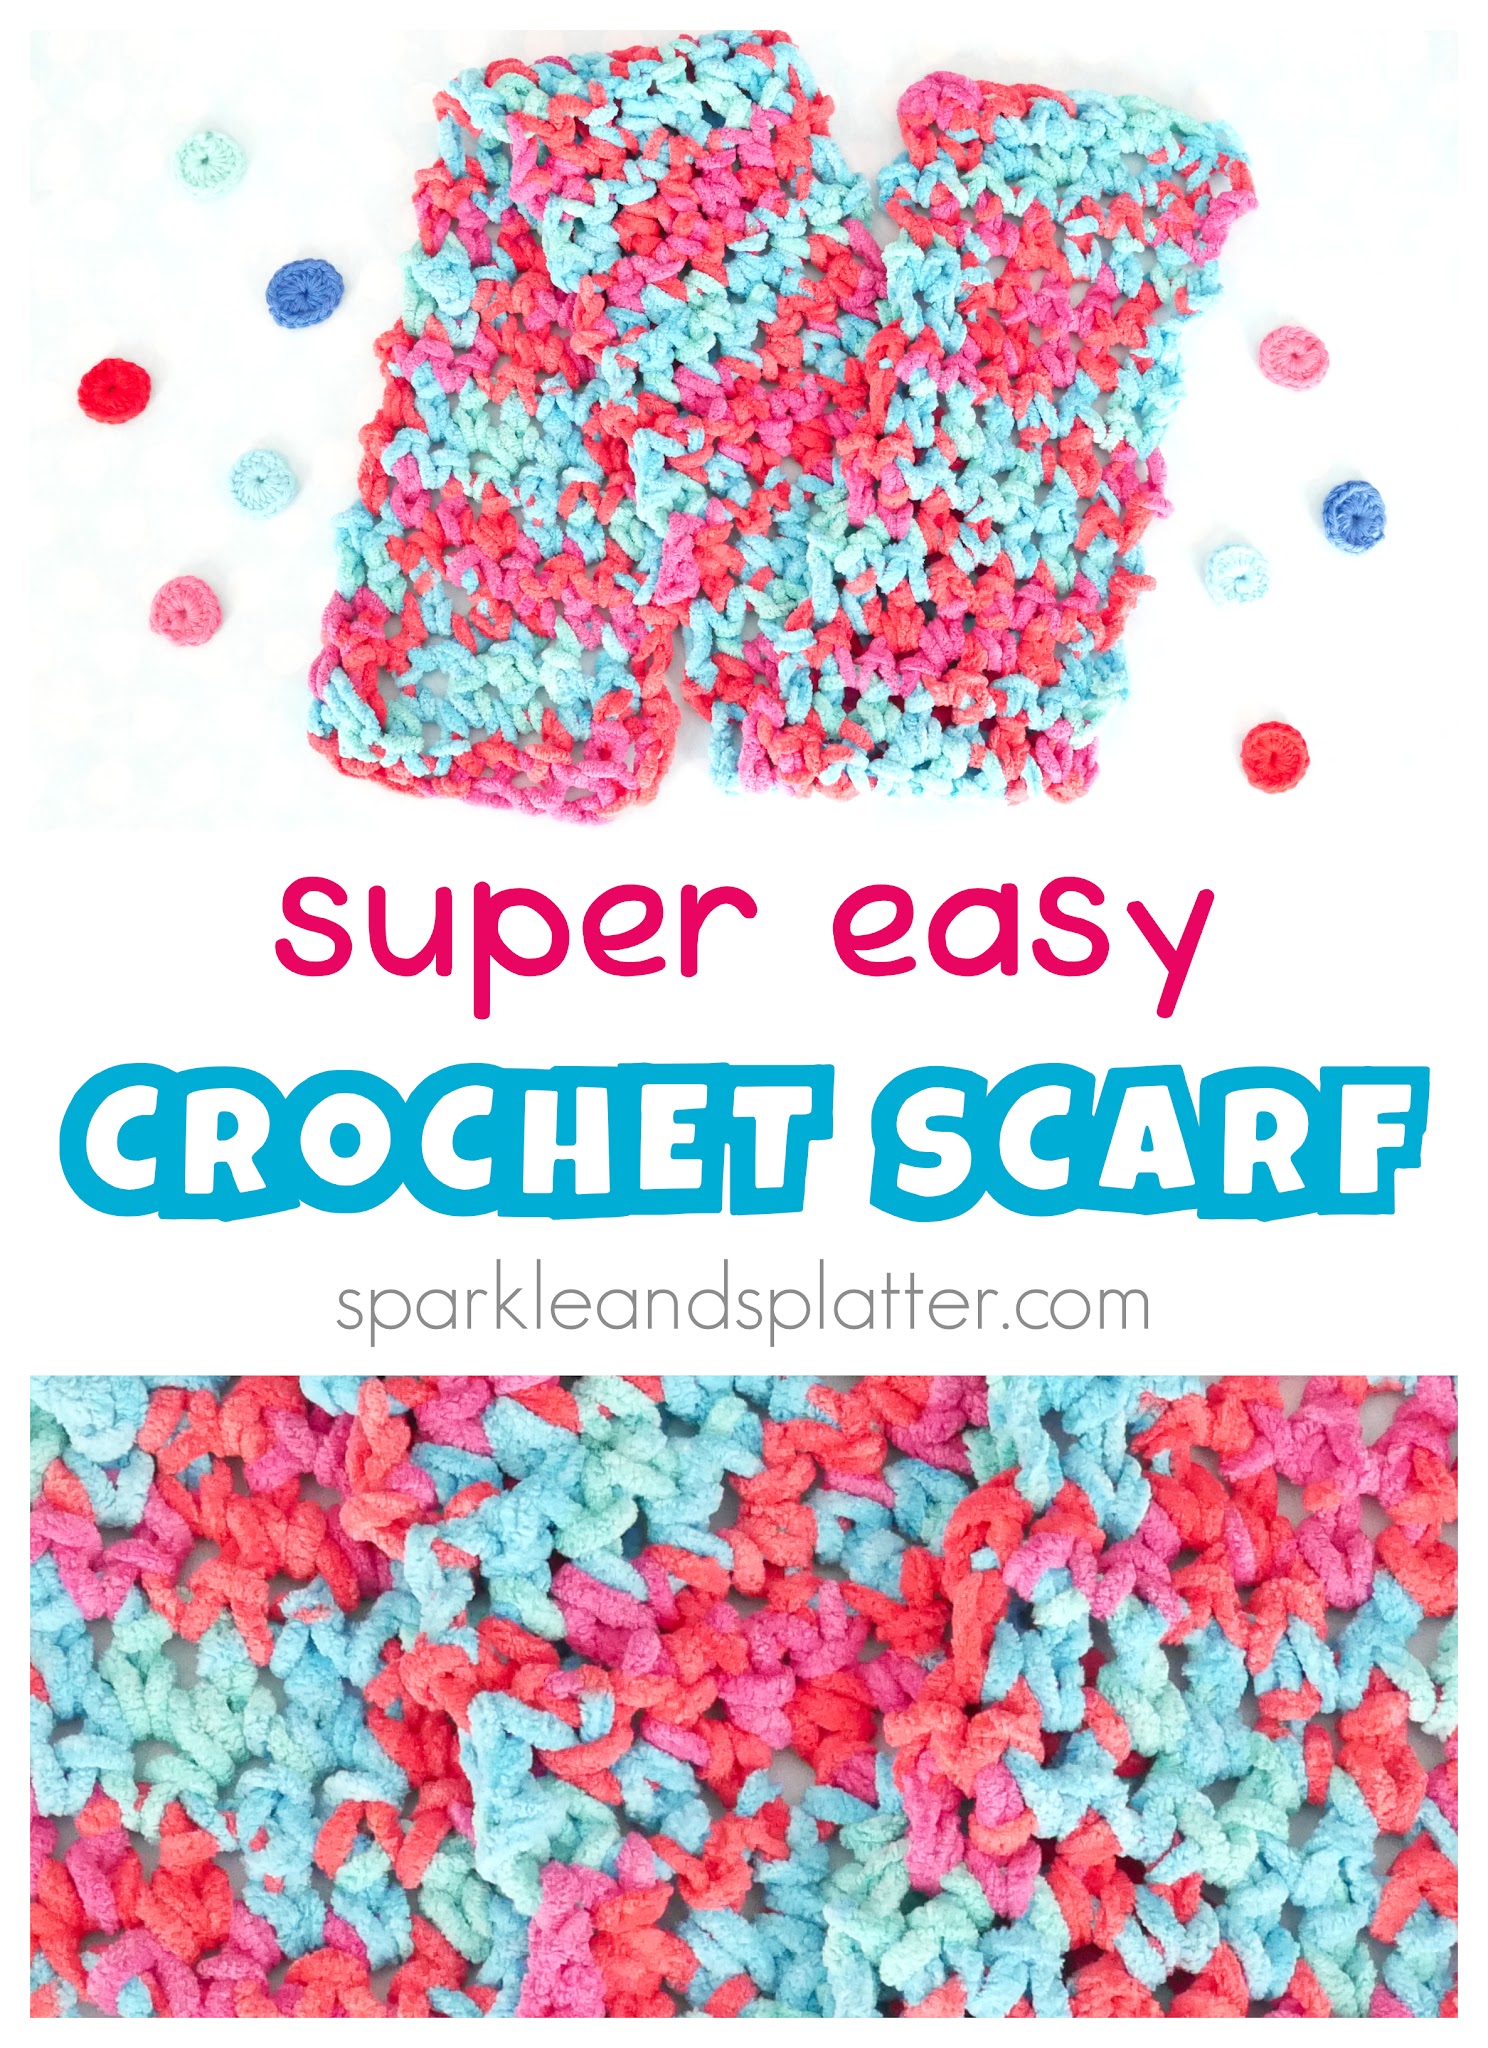 Crochet Super Easy Scarf